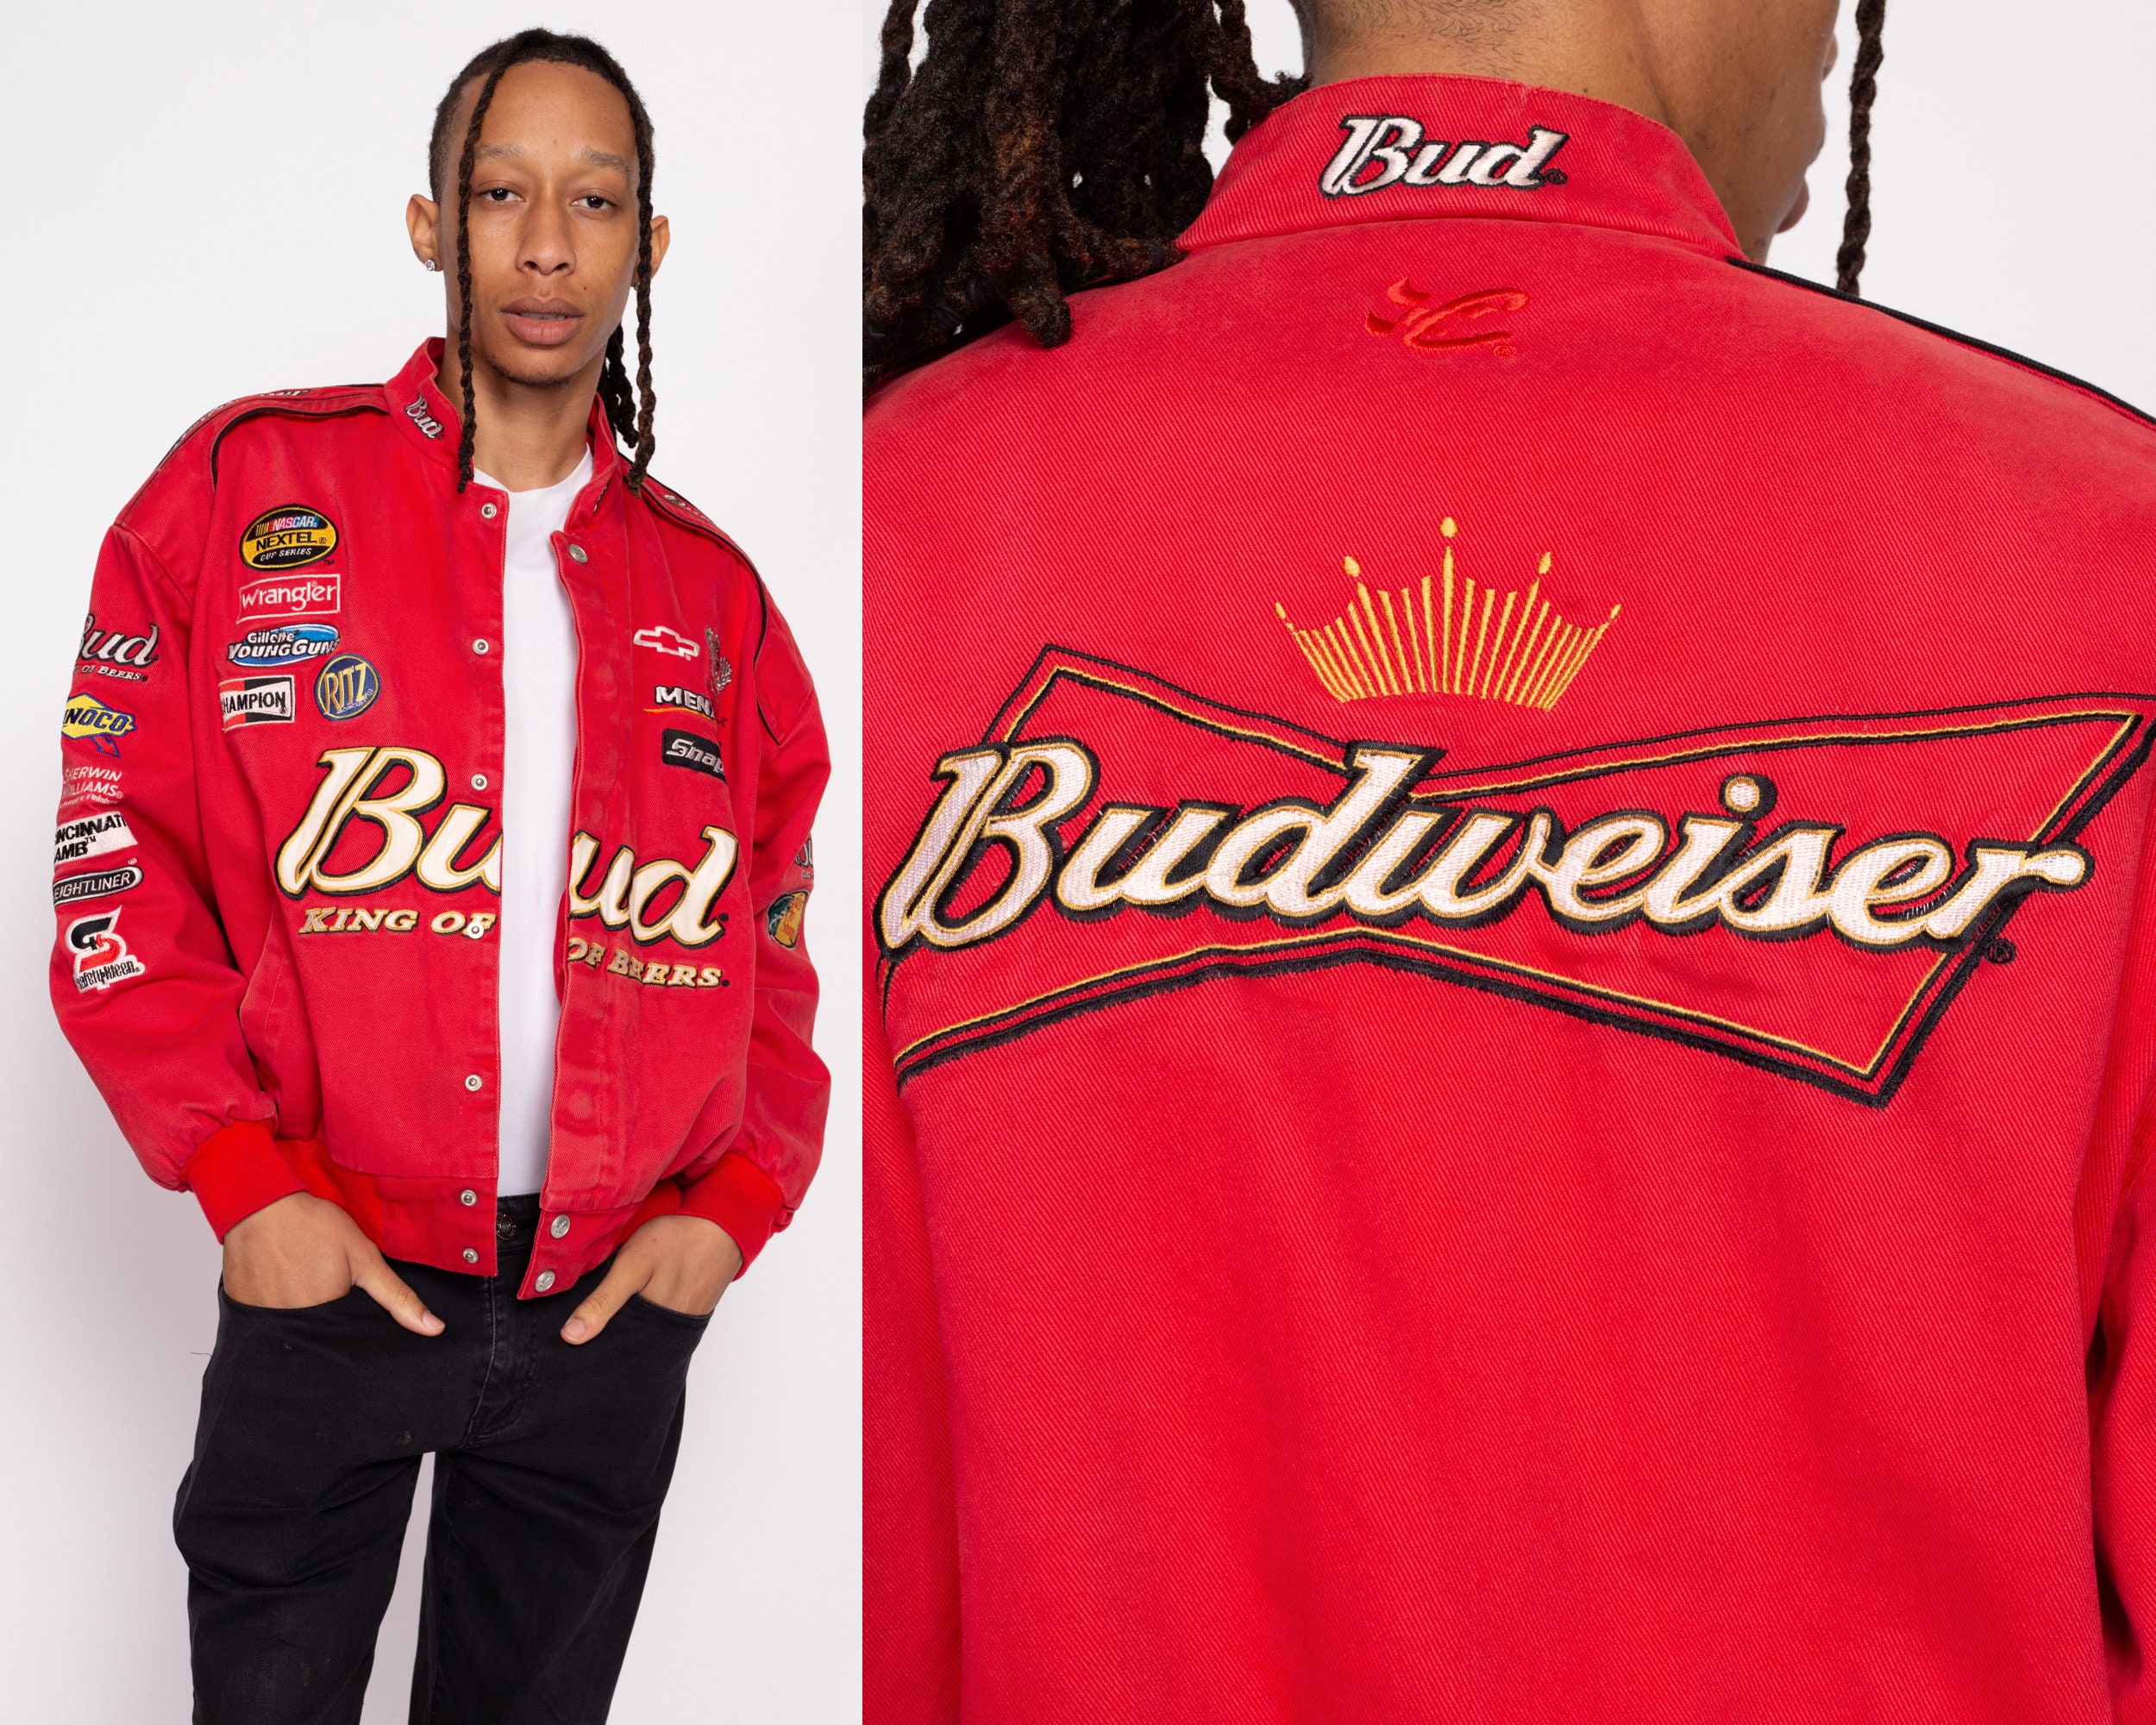 XL s NASCAR Budweiser Chase Authentics Racing Jacket Men's   Vintage Red  Bud King Of Beers Logo Sponsor Jacket